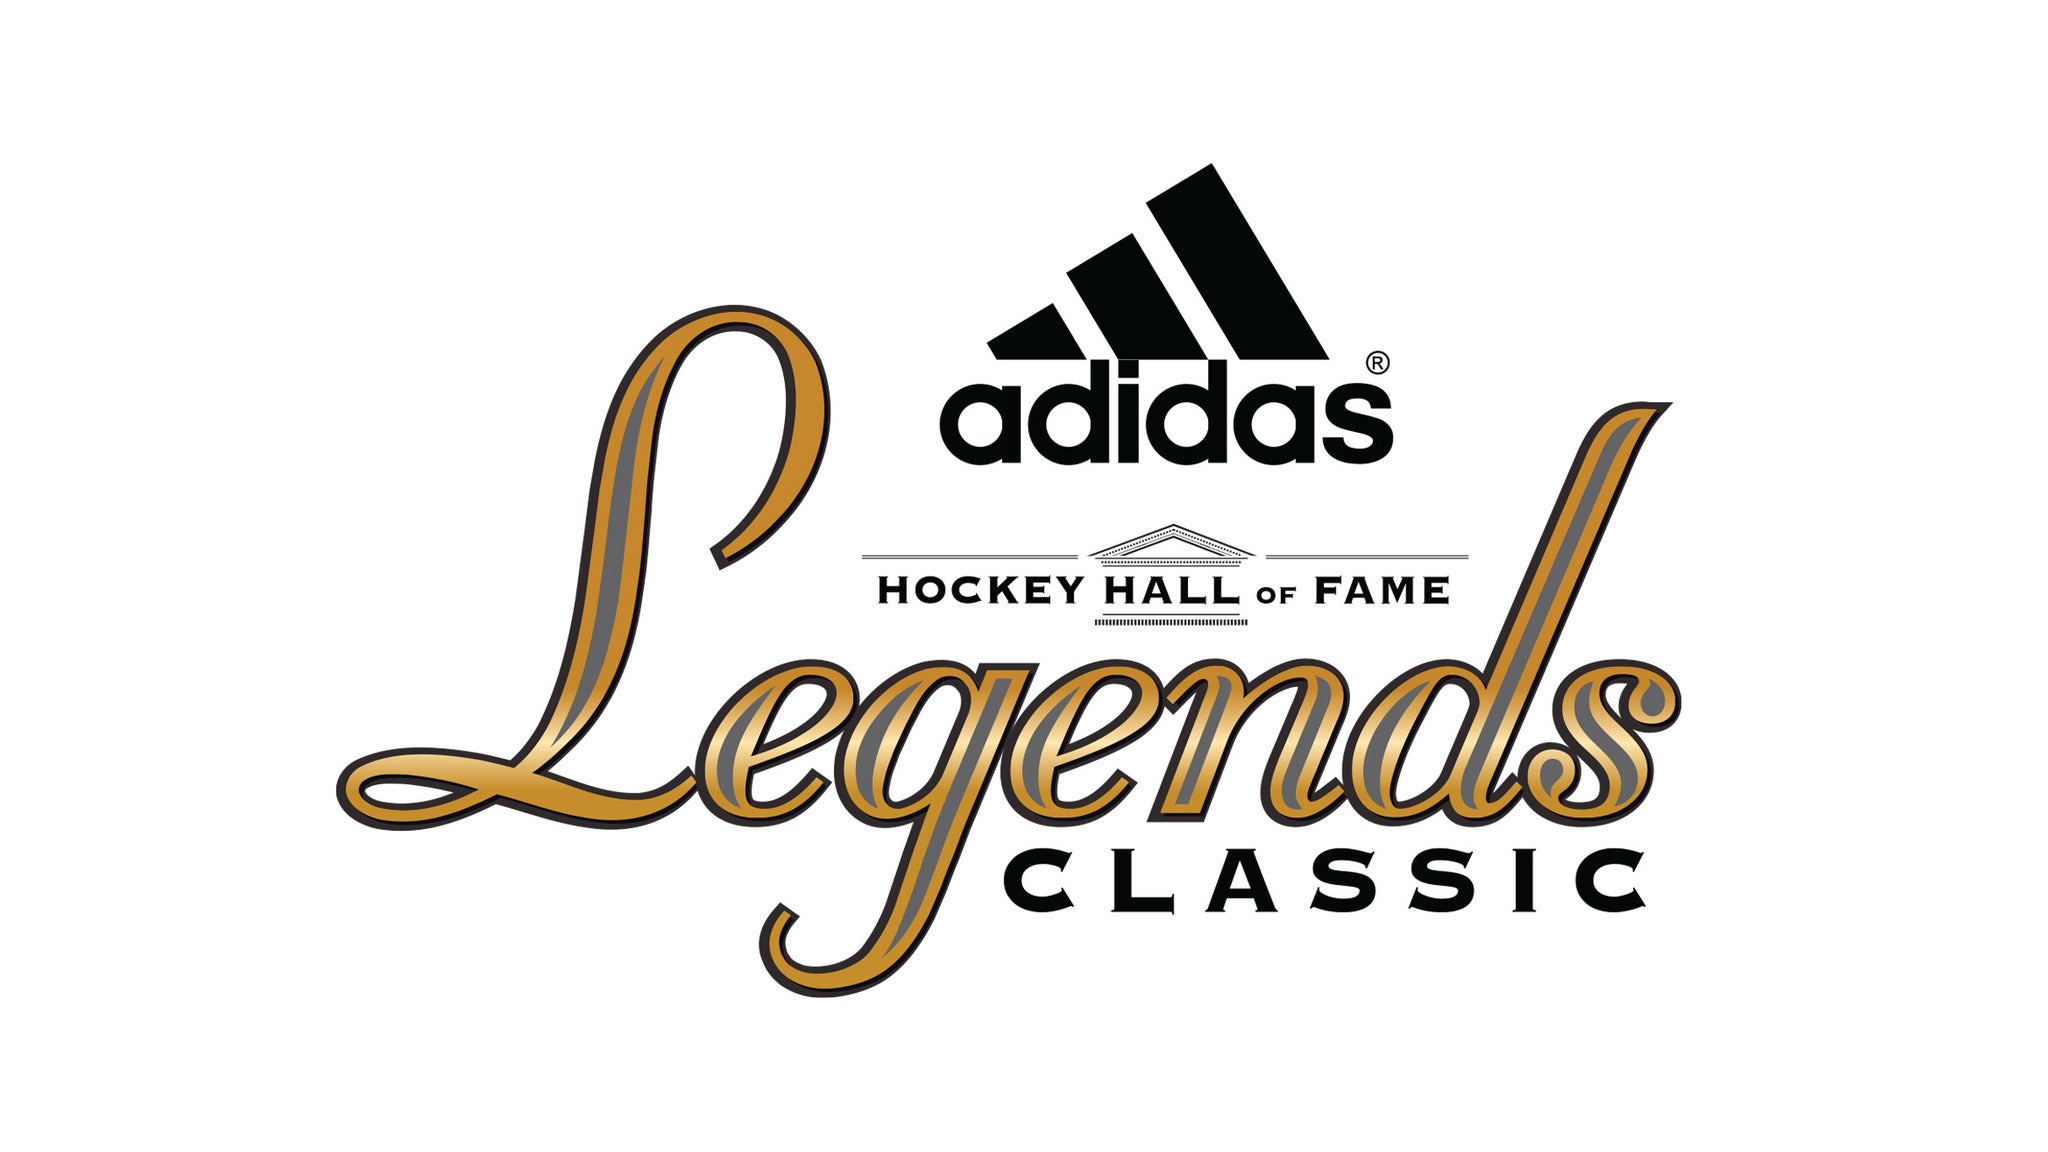 Hyundai Hockey Hall of Fame Legends Classic presale information on freepresalepasswords.com